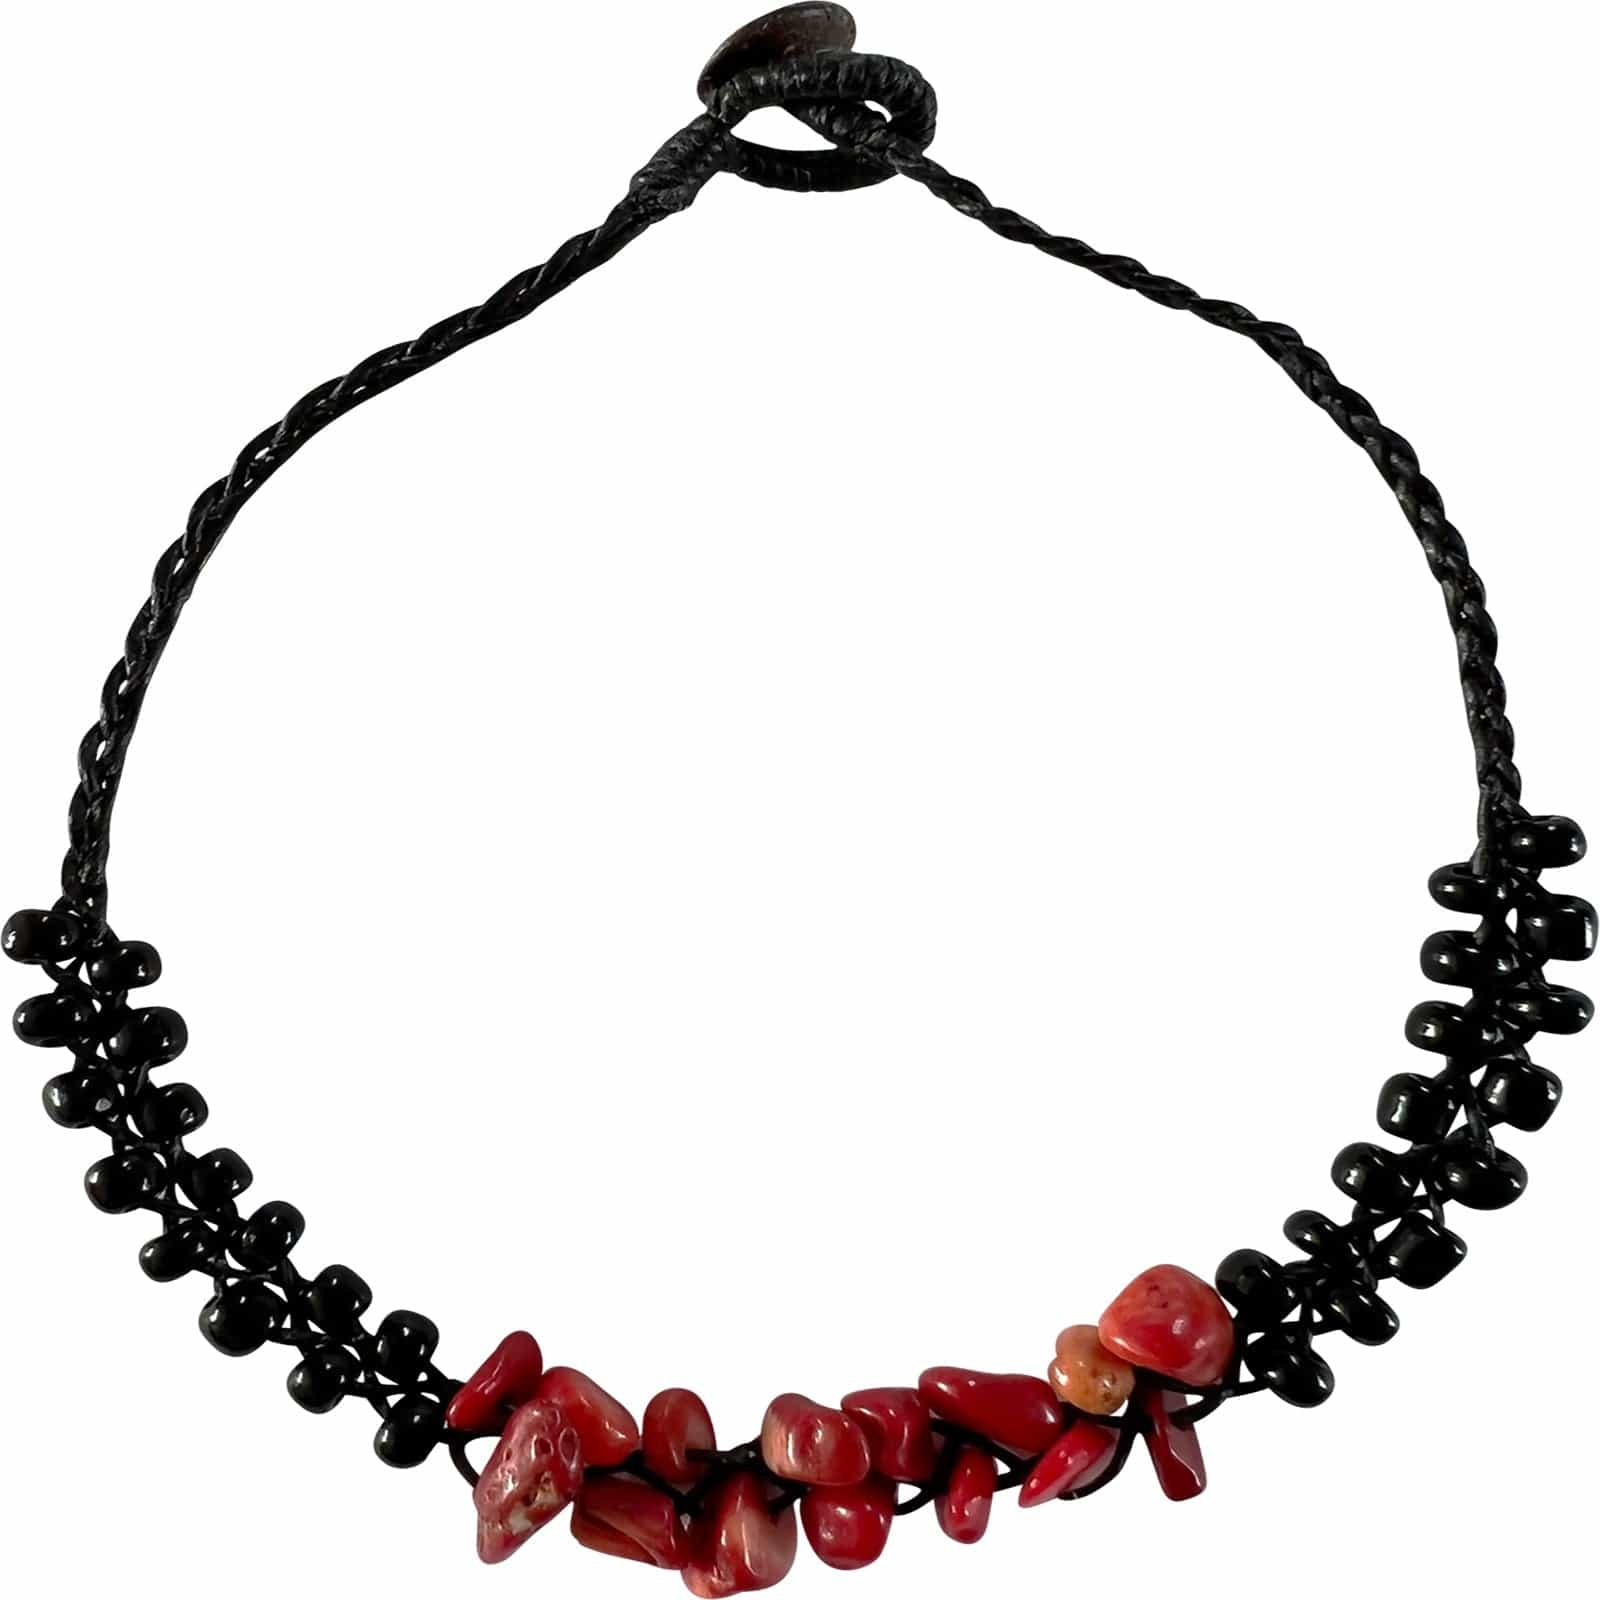 Black Red Beaded Anklet Foot Chain Ankle Bracelet Girl Ladies Handmade Jewellery